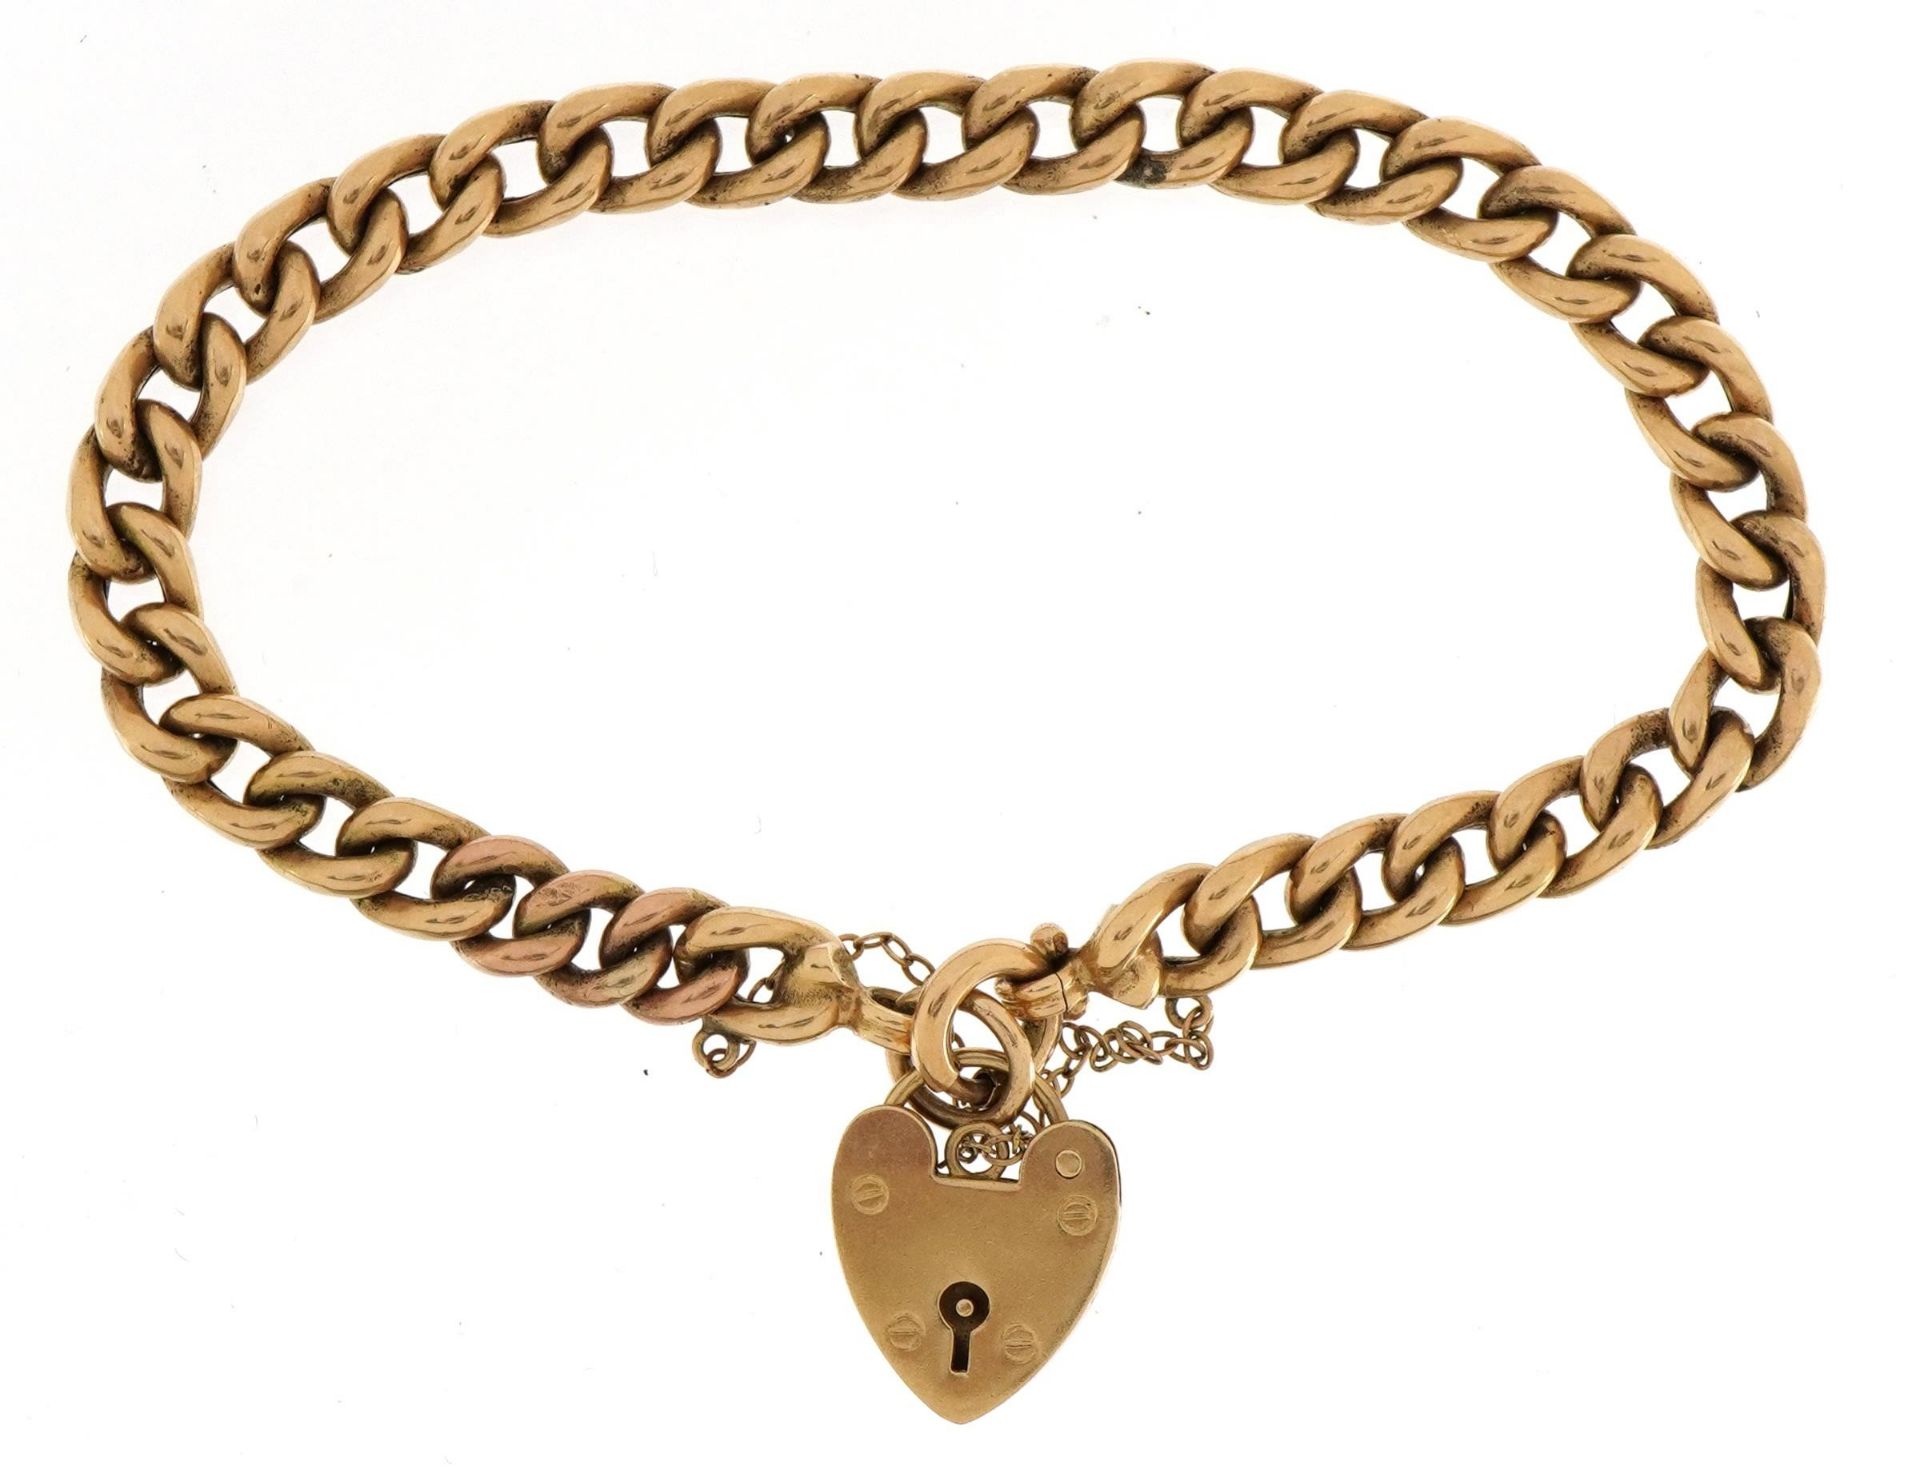 9ct gold bracelet with love heart padlock 15.8g